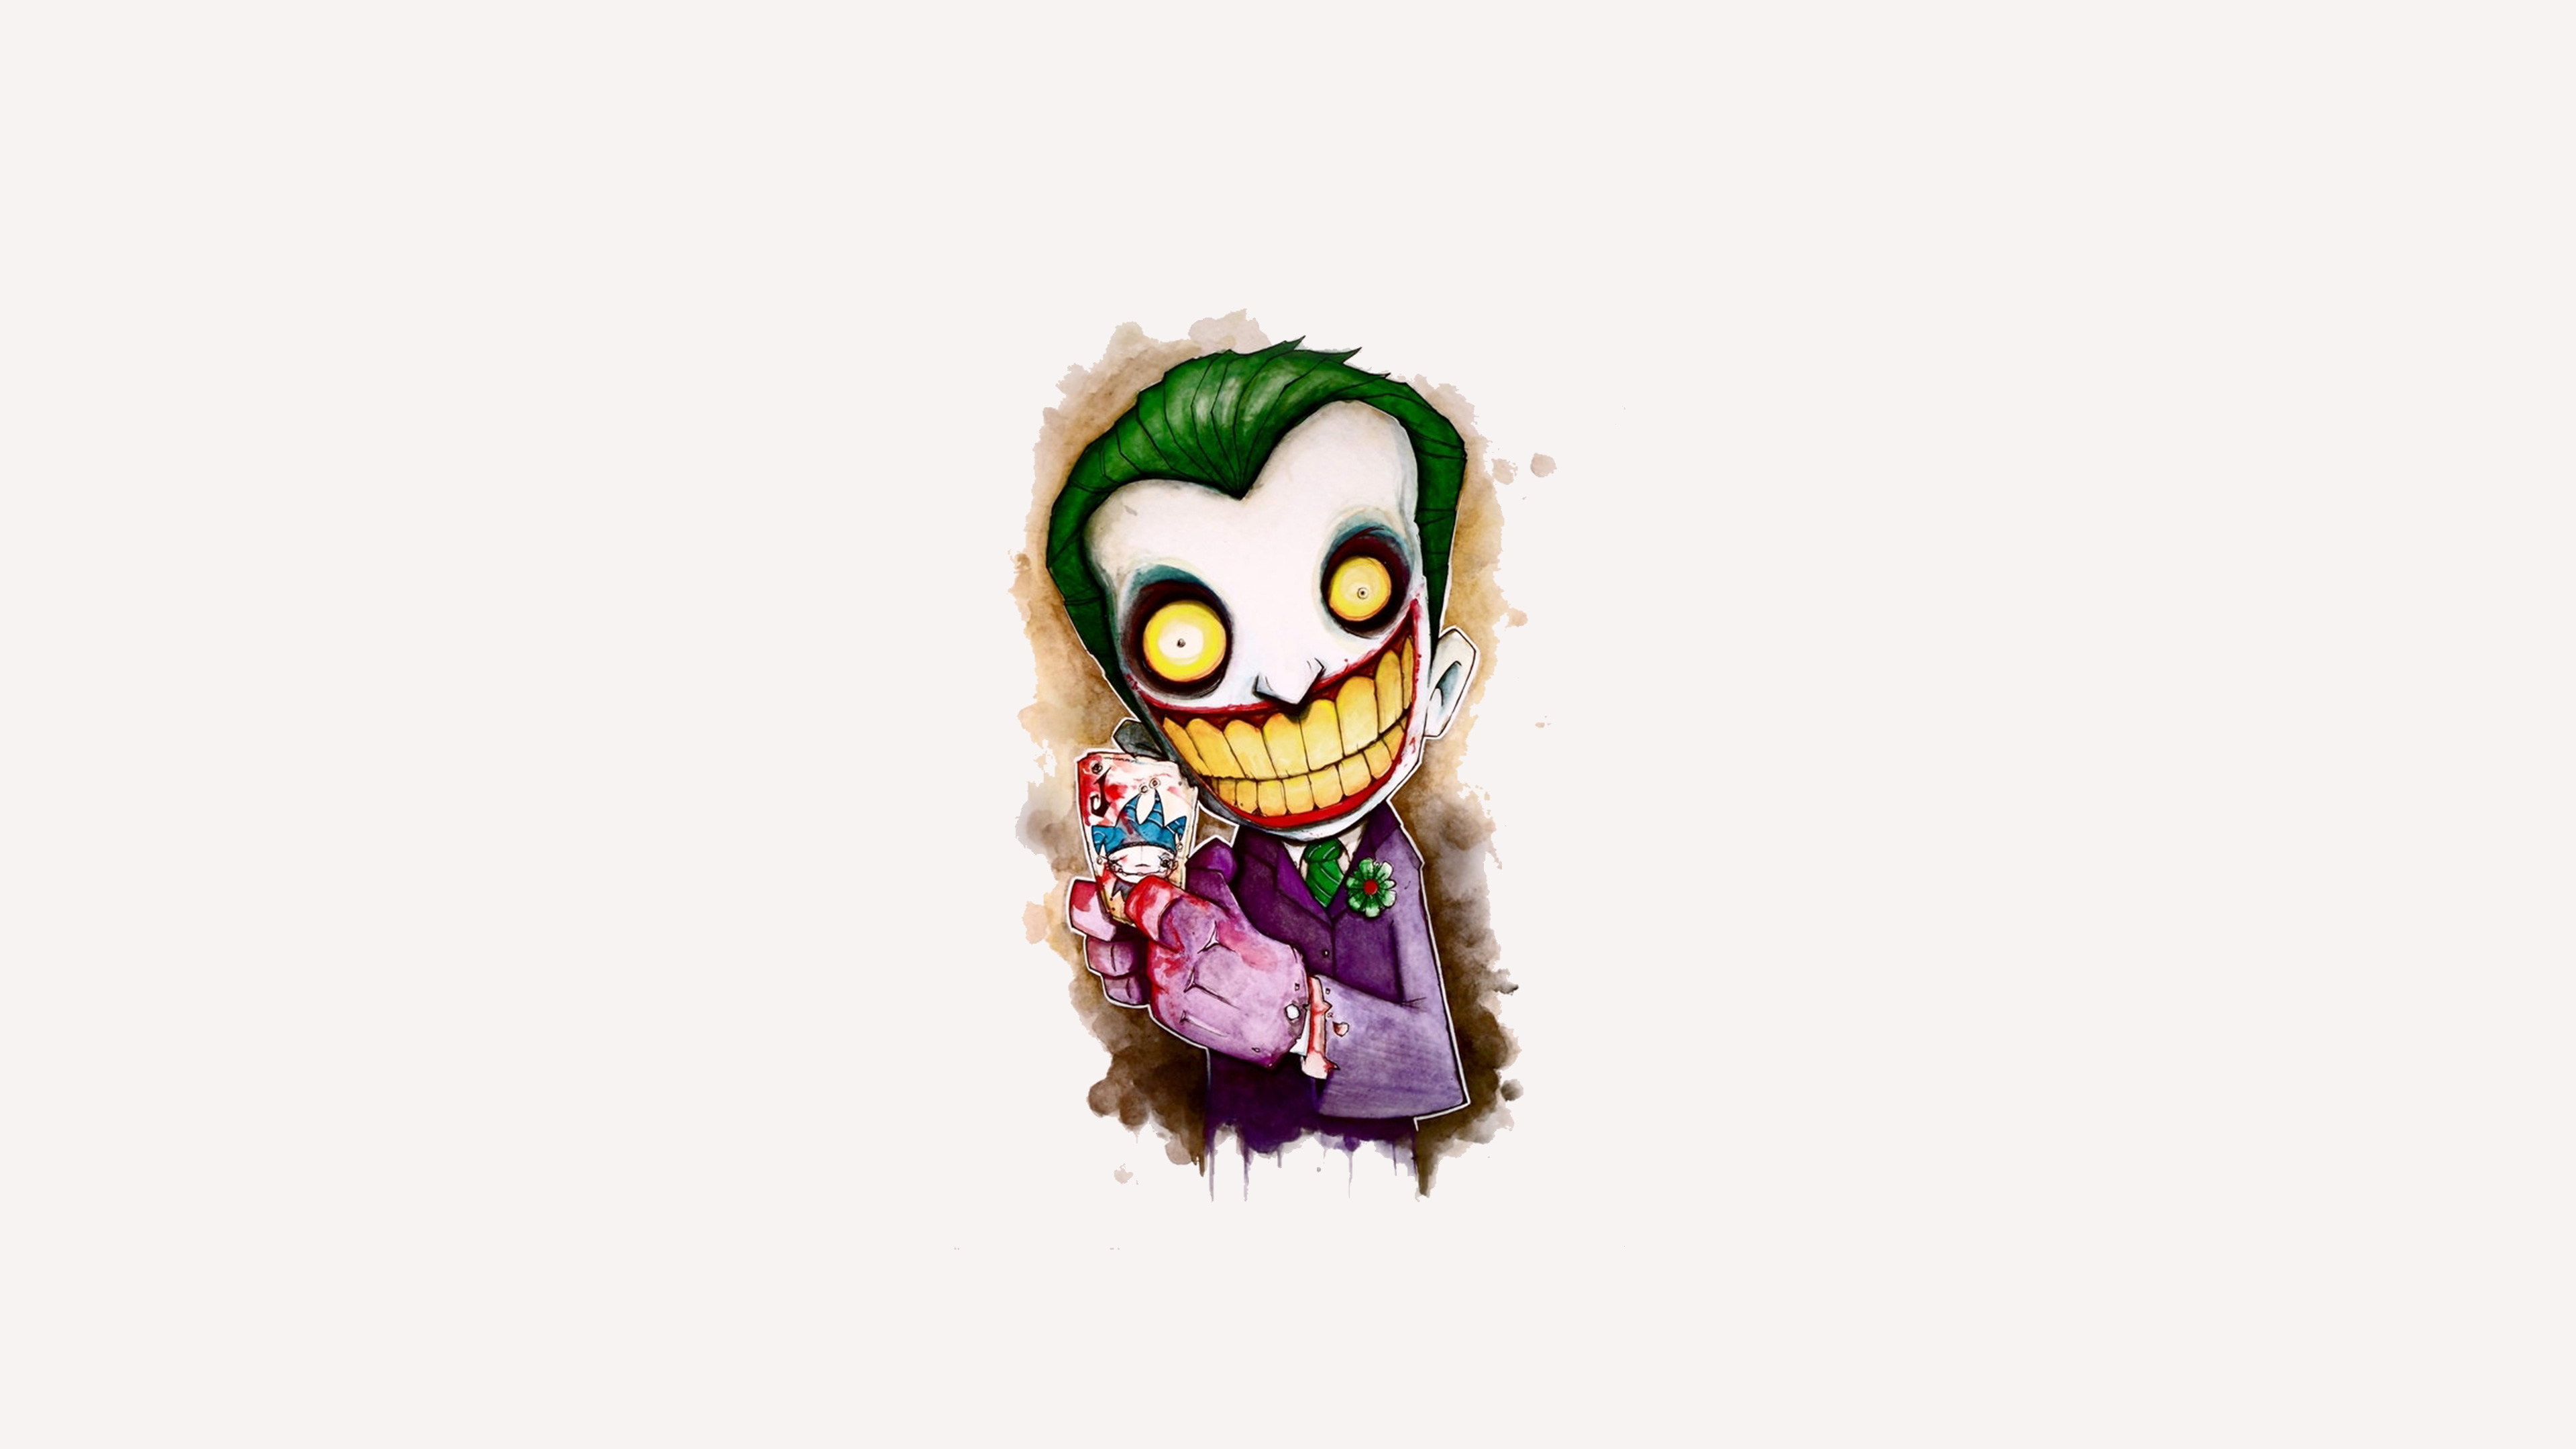 Joker Cartoon 4k Artwork, HD Artist, 4k Wallpapers, Images, Backgrounds,  Photos and Pictures